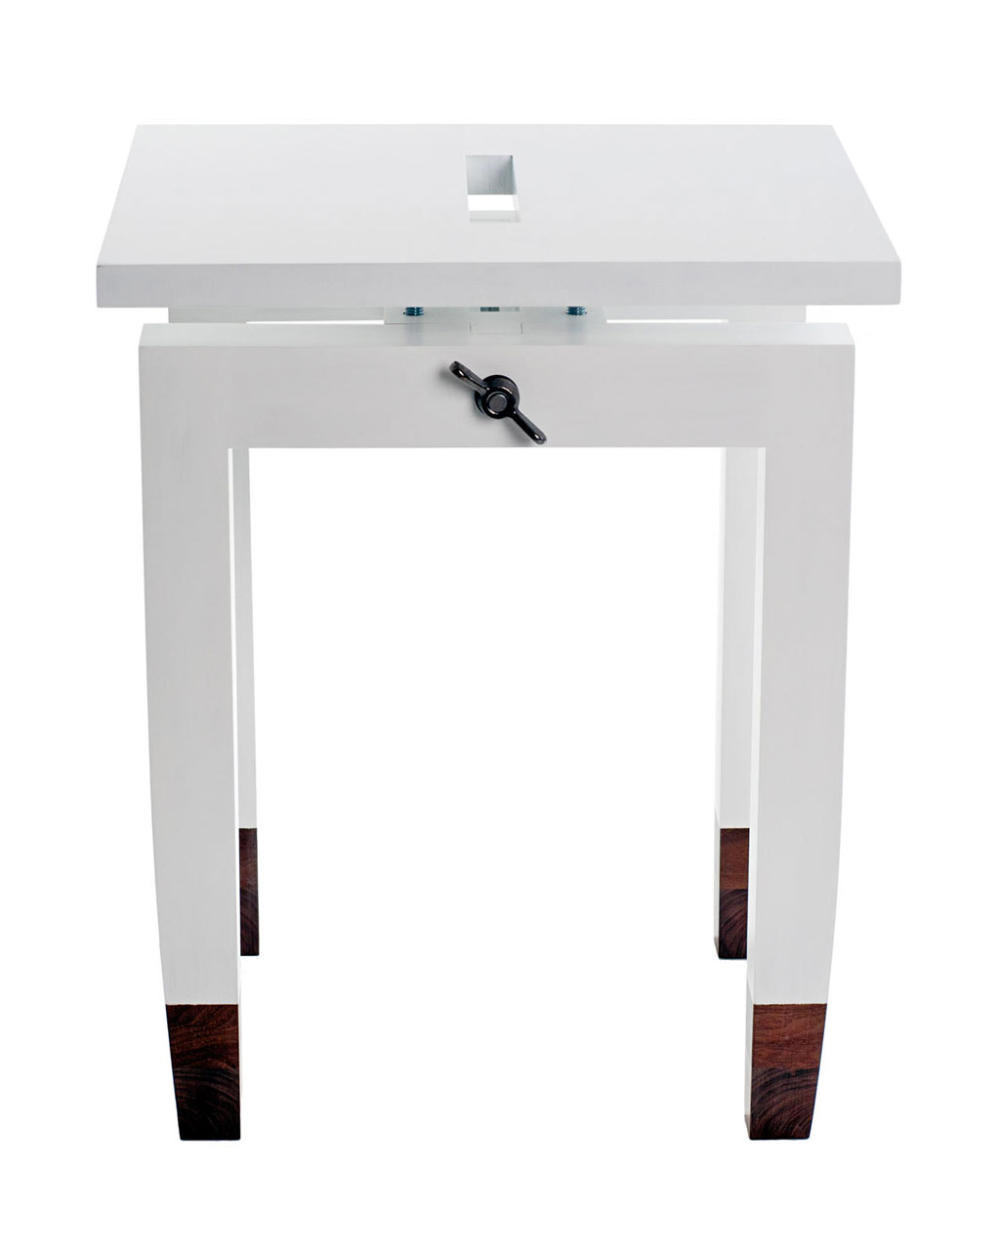 daniel-moyer-design-workshop-chic-table-series1.jpg